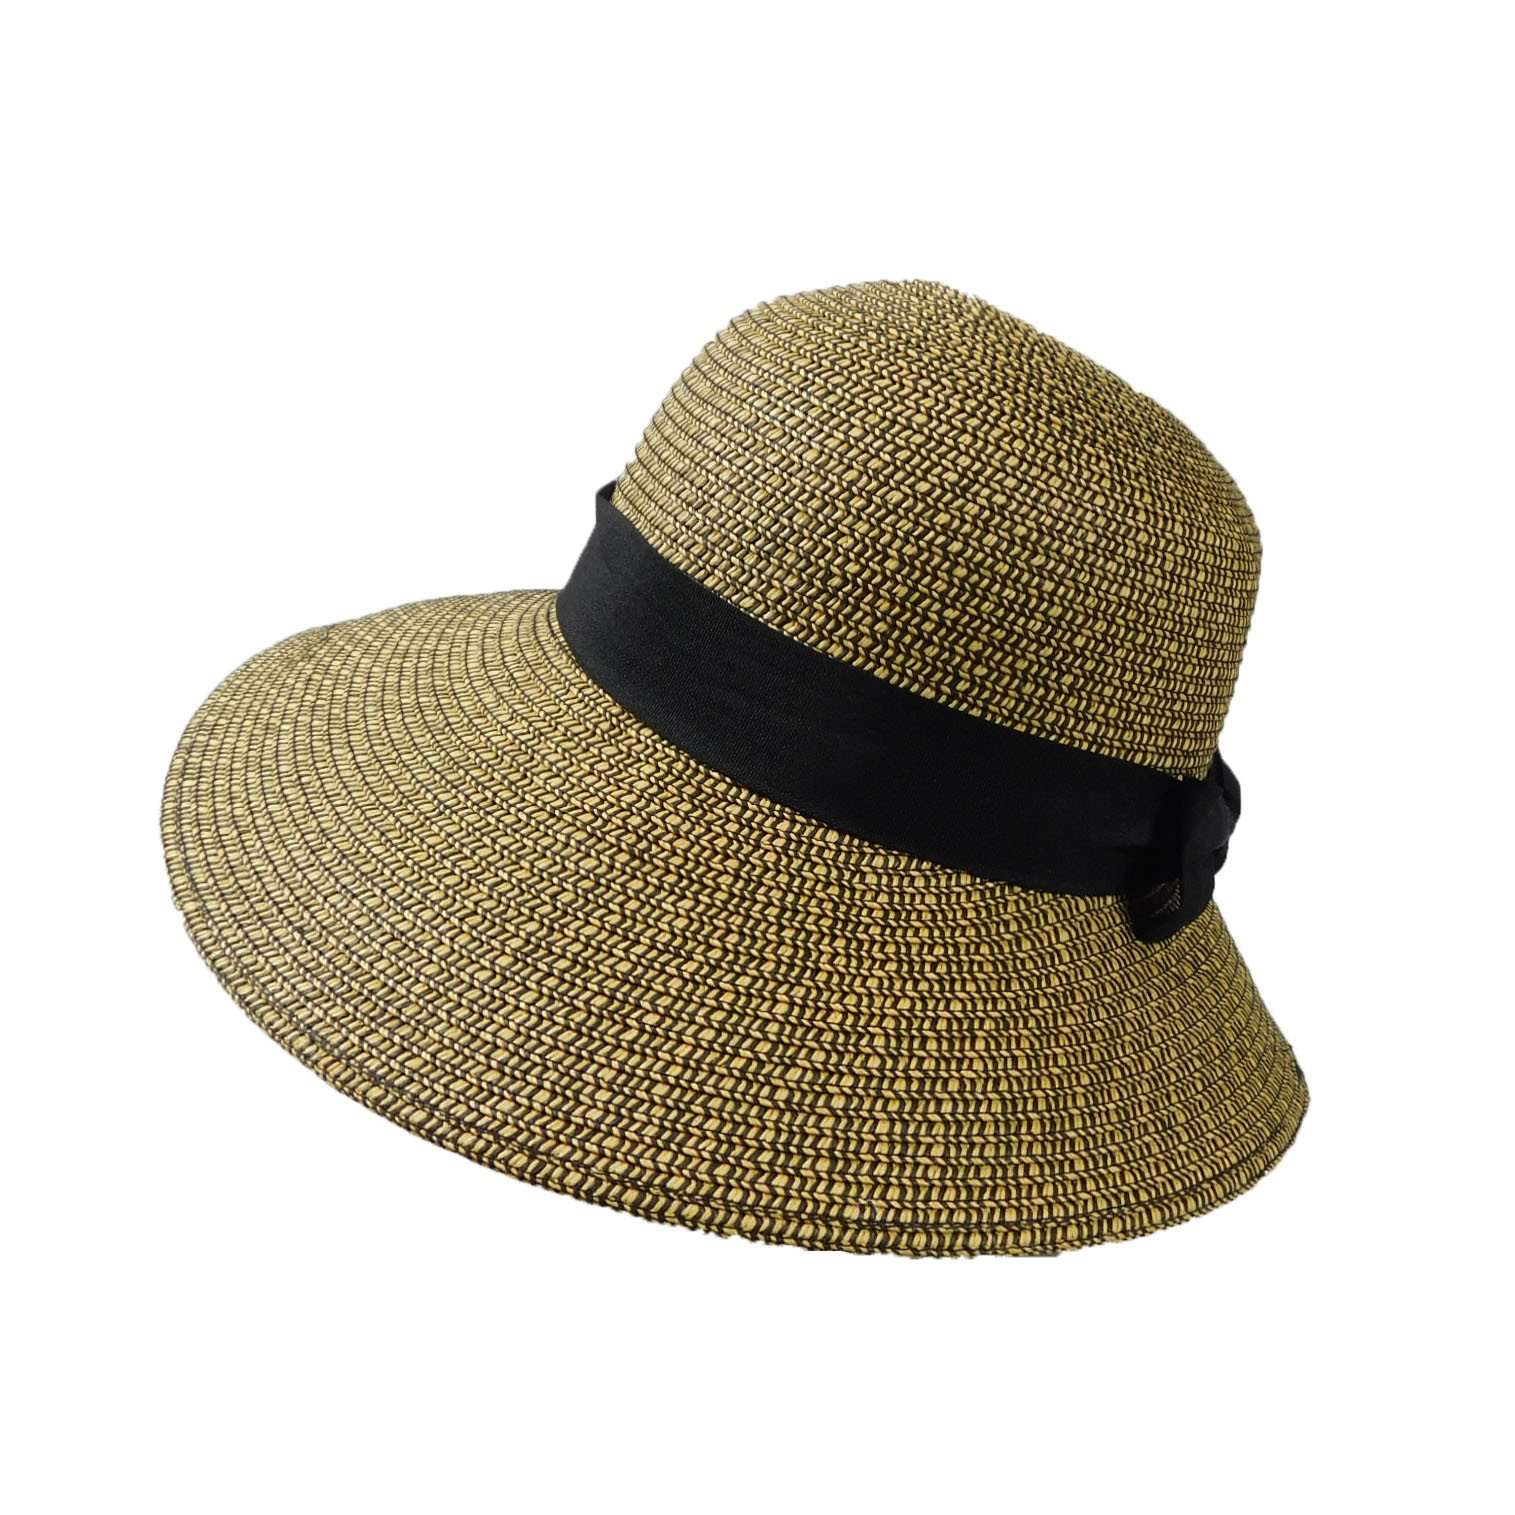 Downturned Big Brim Asymmetrical Summer Hat Wide Brim Hat JEL WSPS608BK Black tweed  